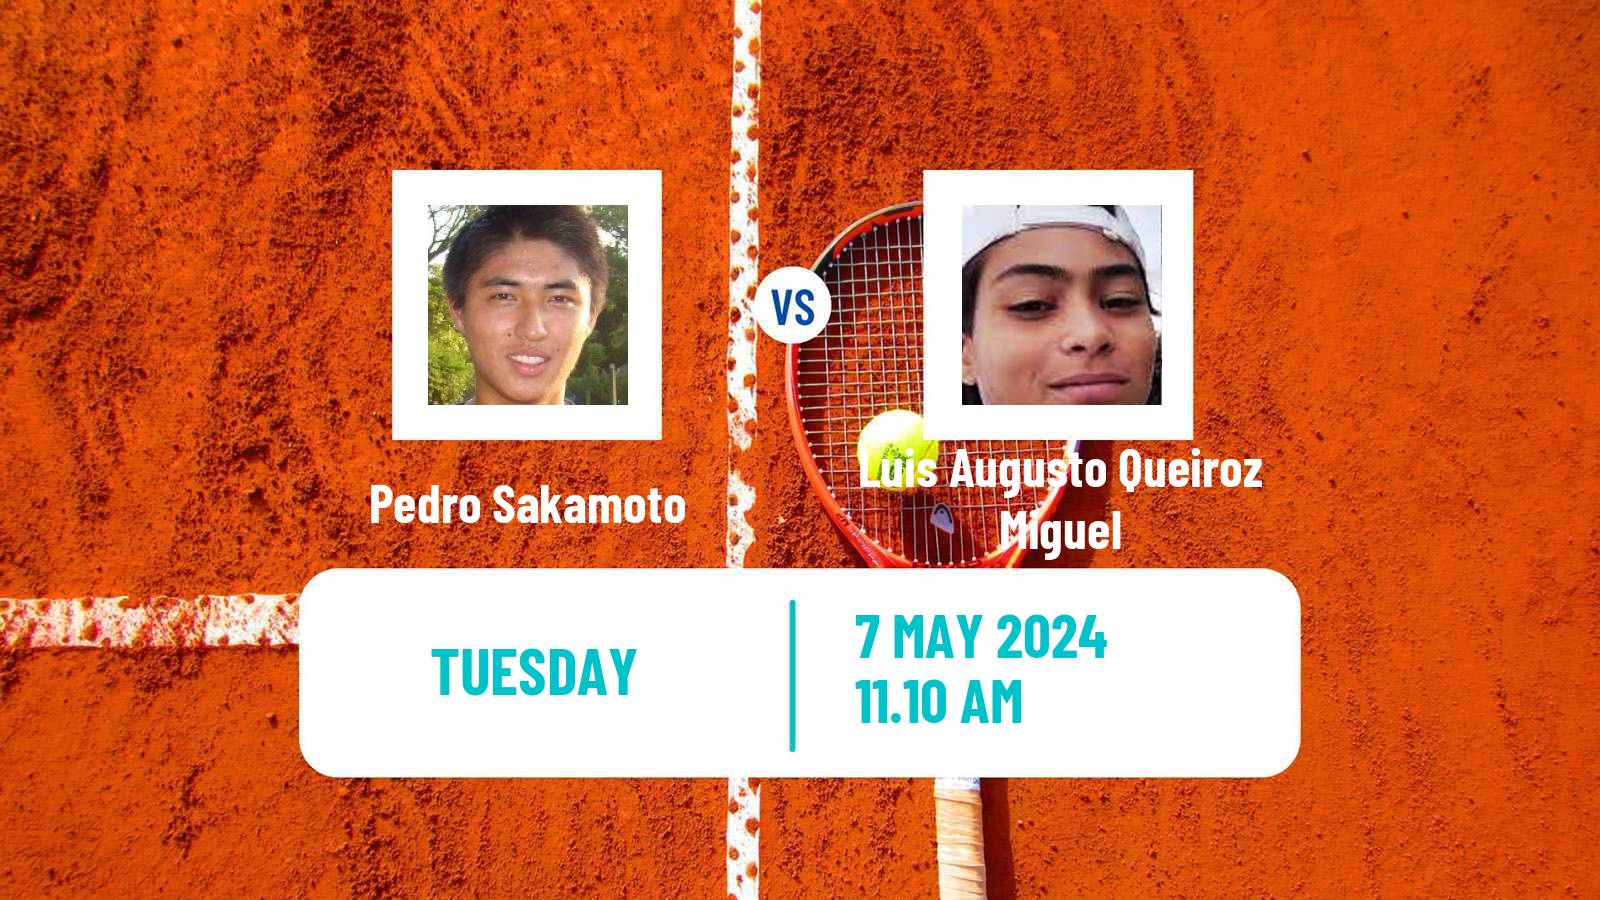 Tennis Santos Challenger Men Pedro Sakamoto - Luis Augusto Queiroz Miguel